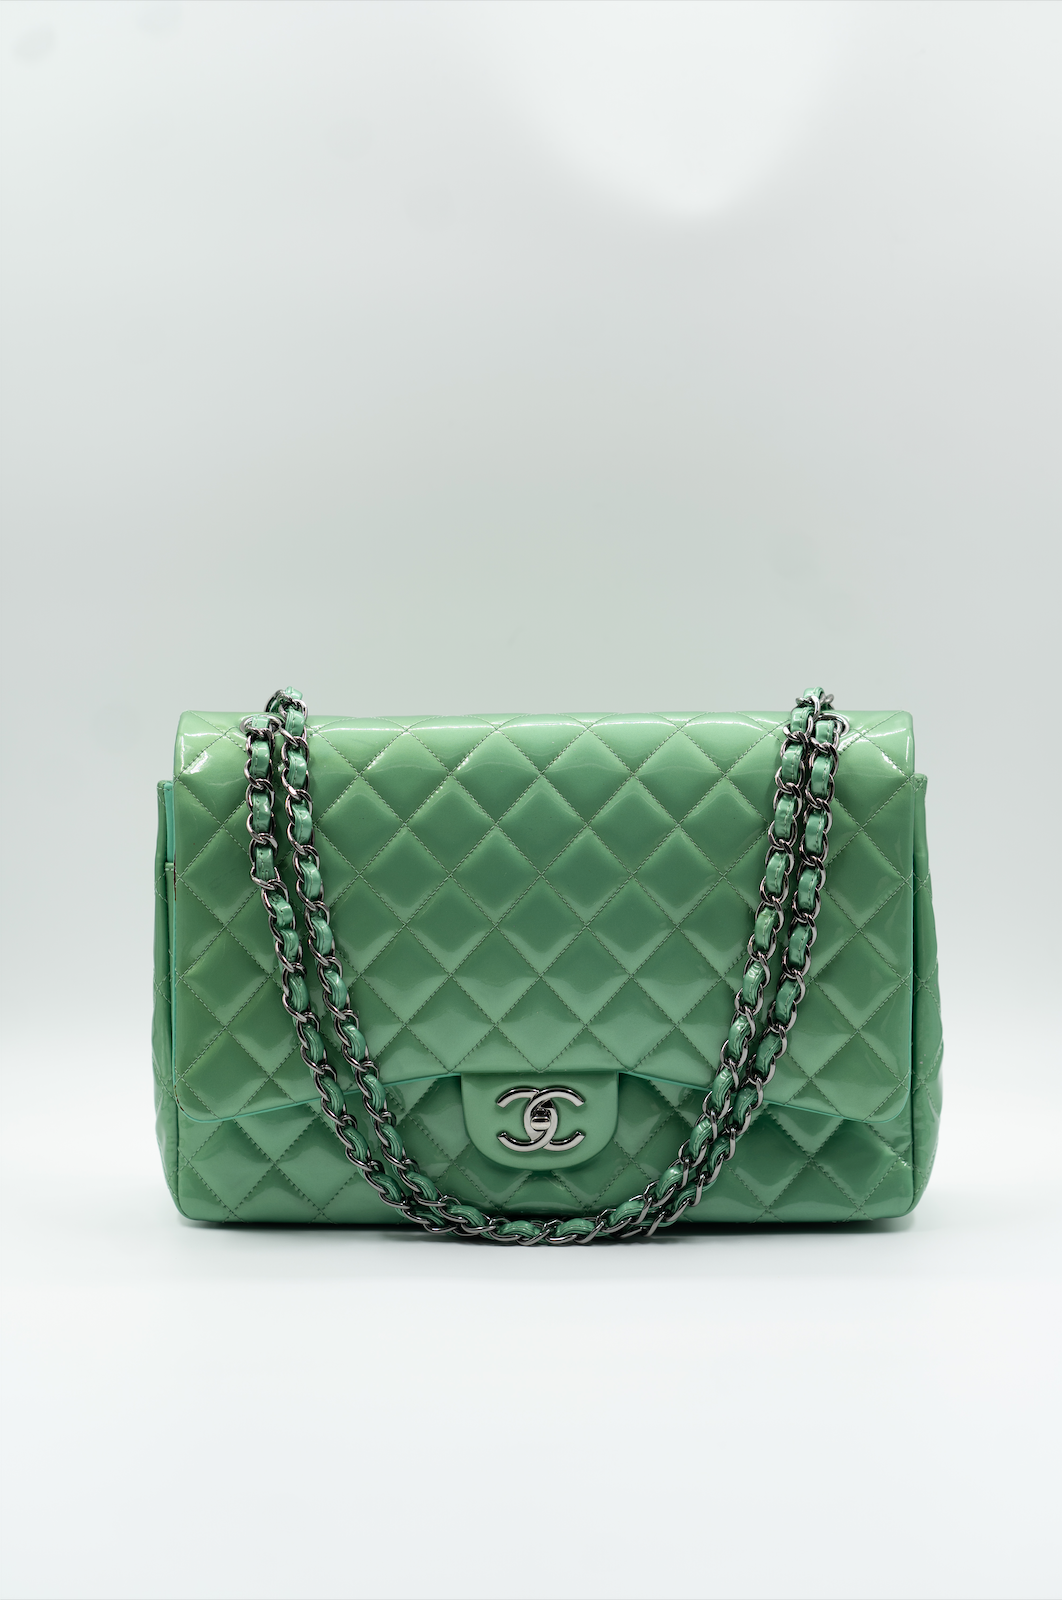 Chanel lime green patent jumbo double flap bag